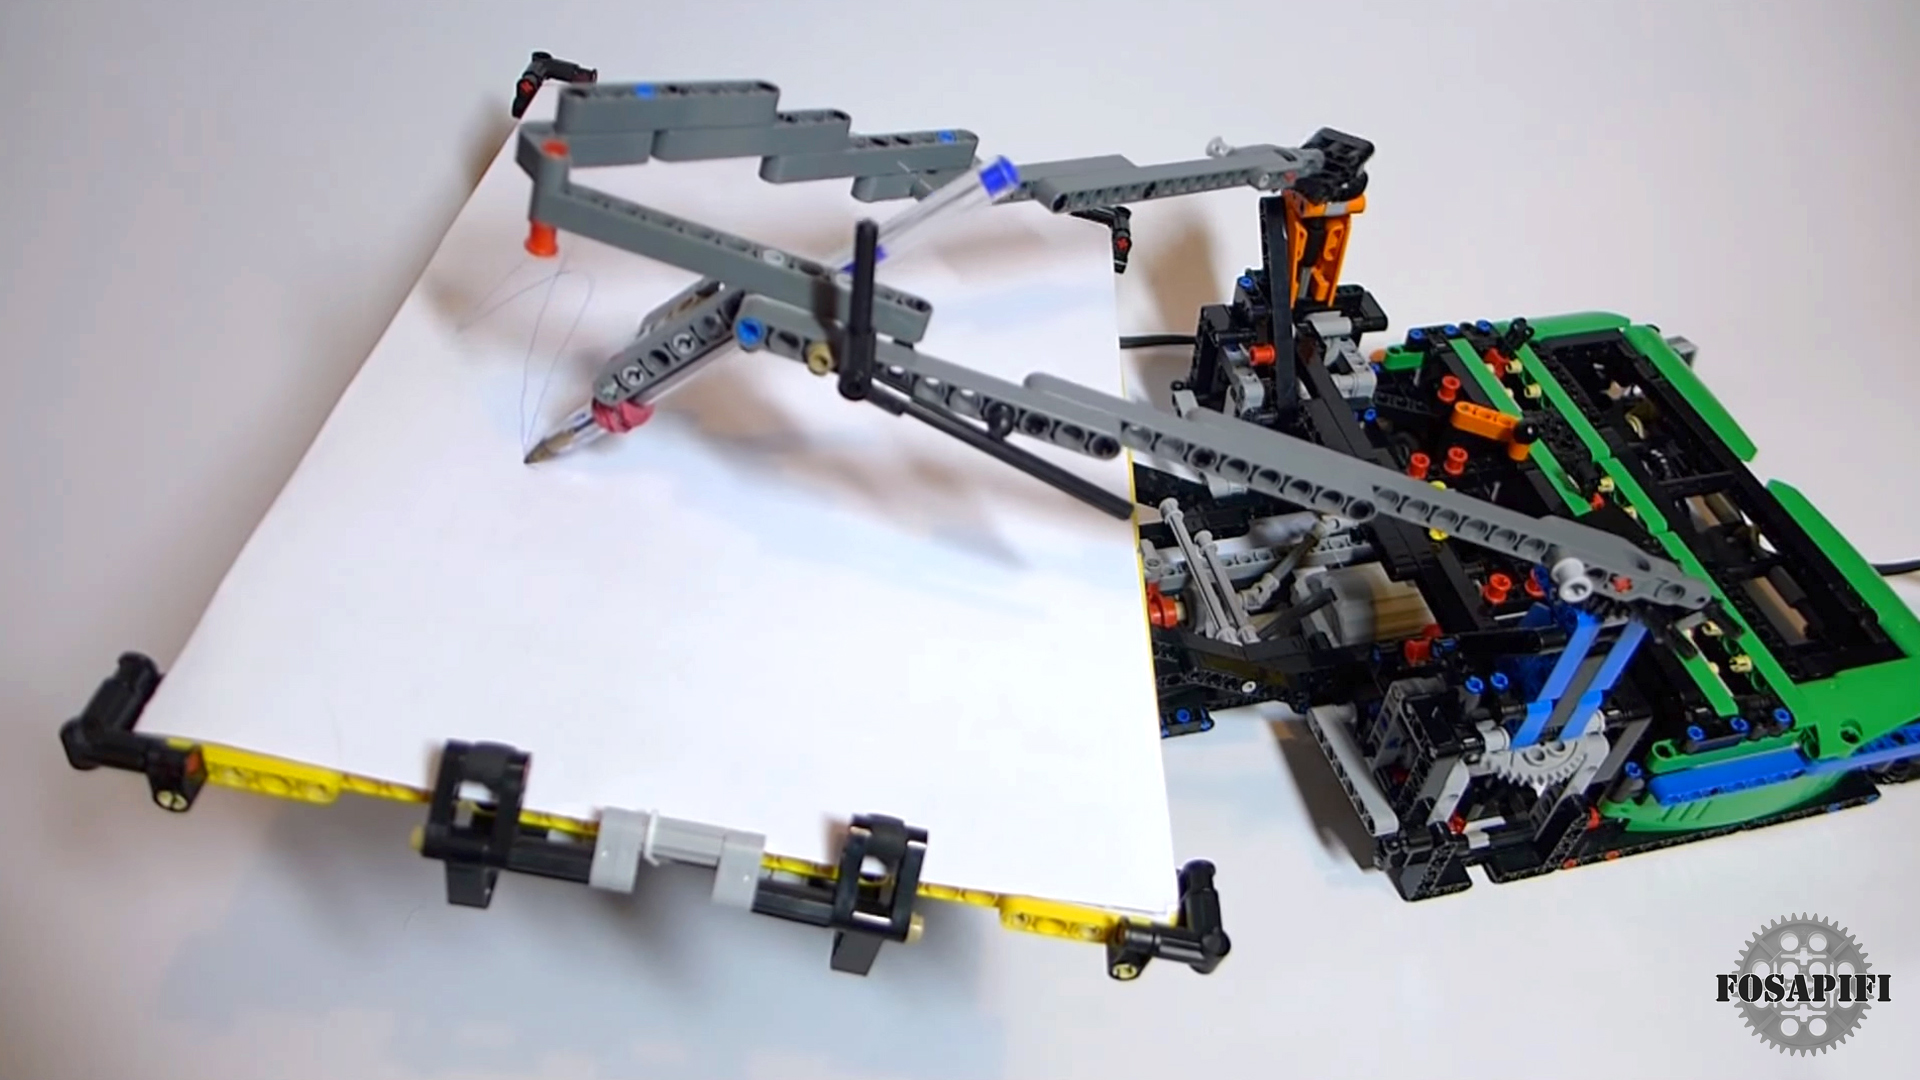 LEGO Technic Creations by FOSAPIFI Spirograph | MOC